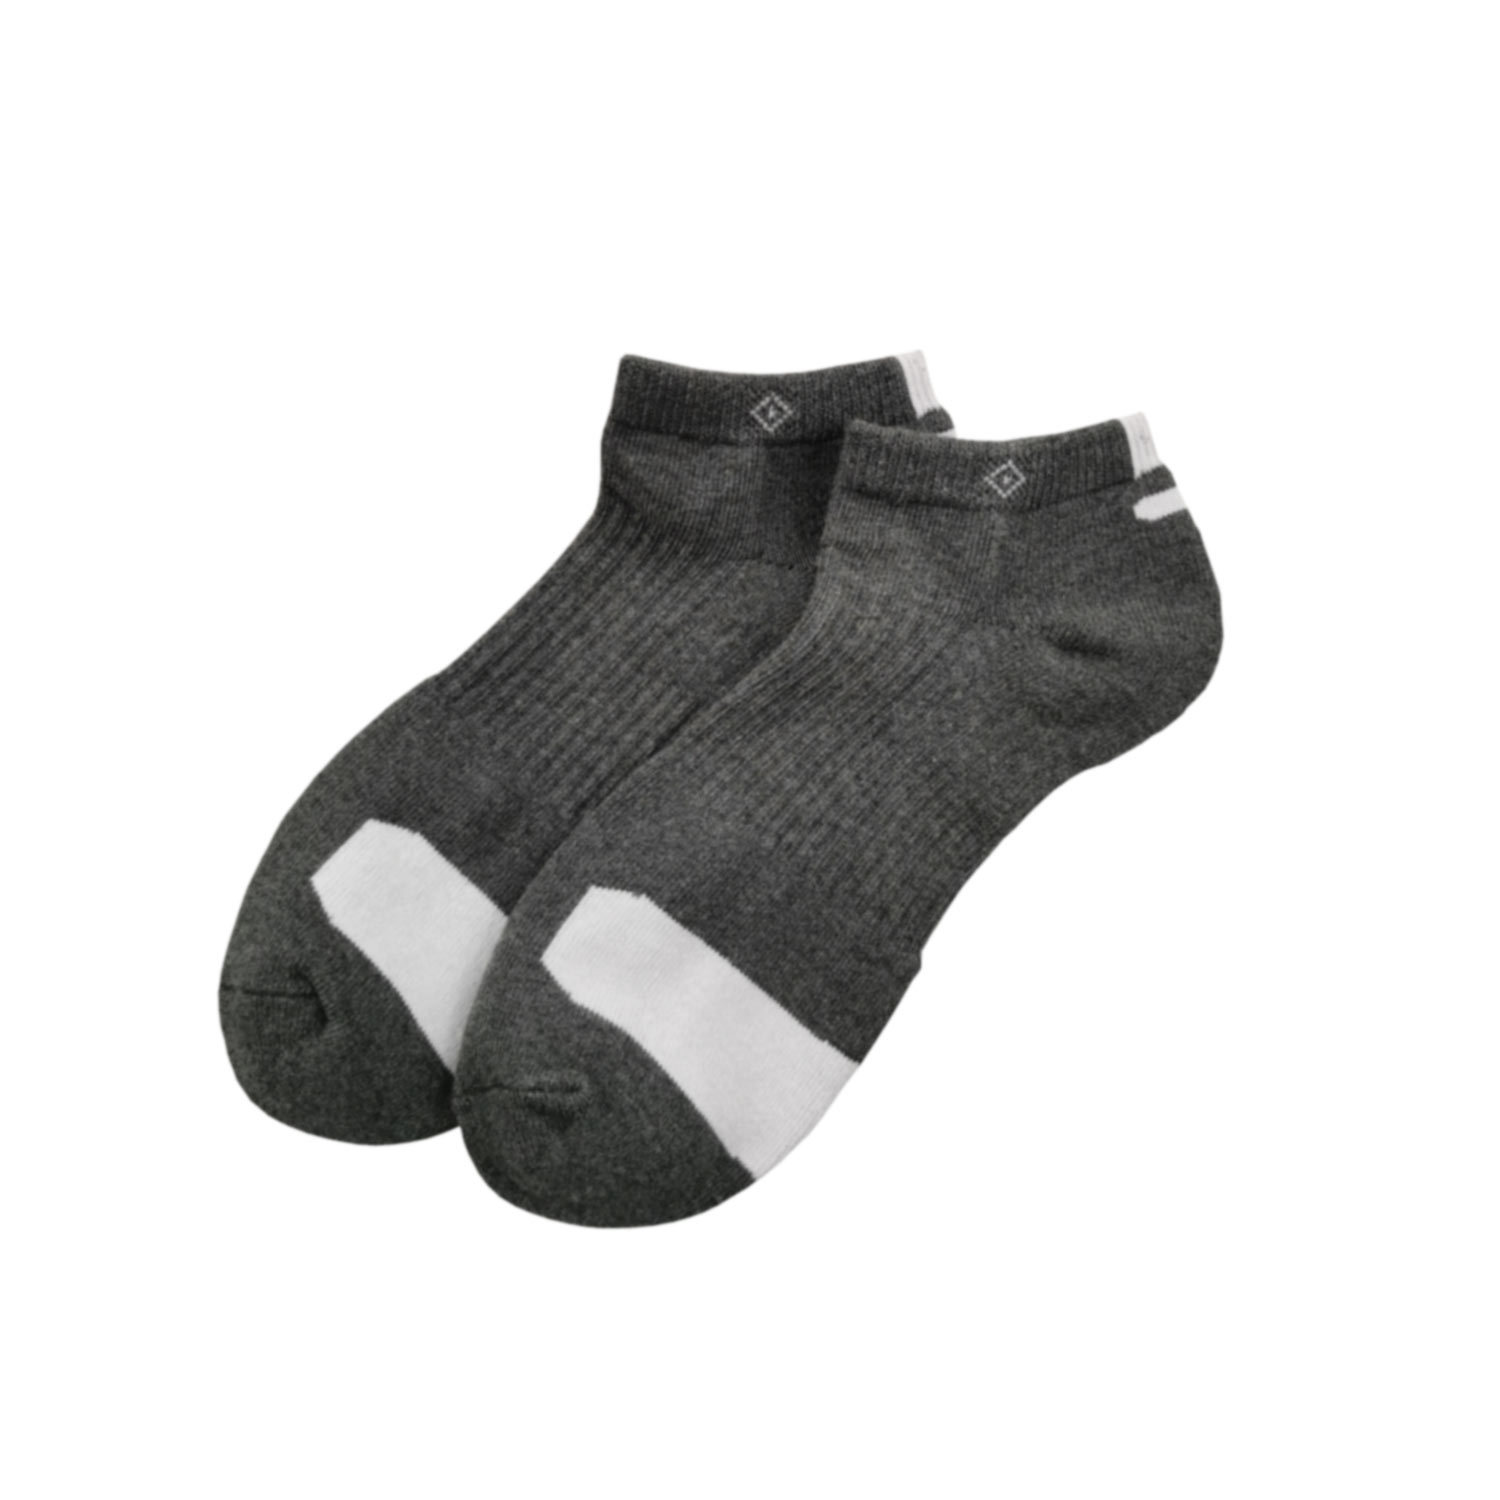 Trend Combed Cotton Terry Towel Socks Socks Sports Socks